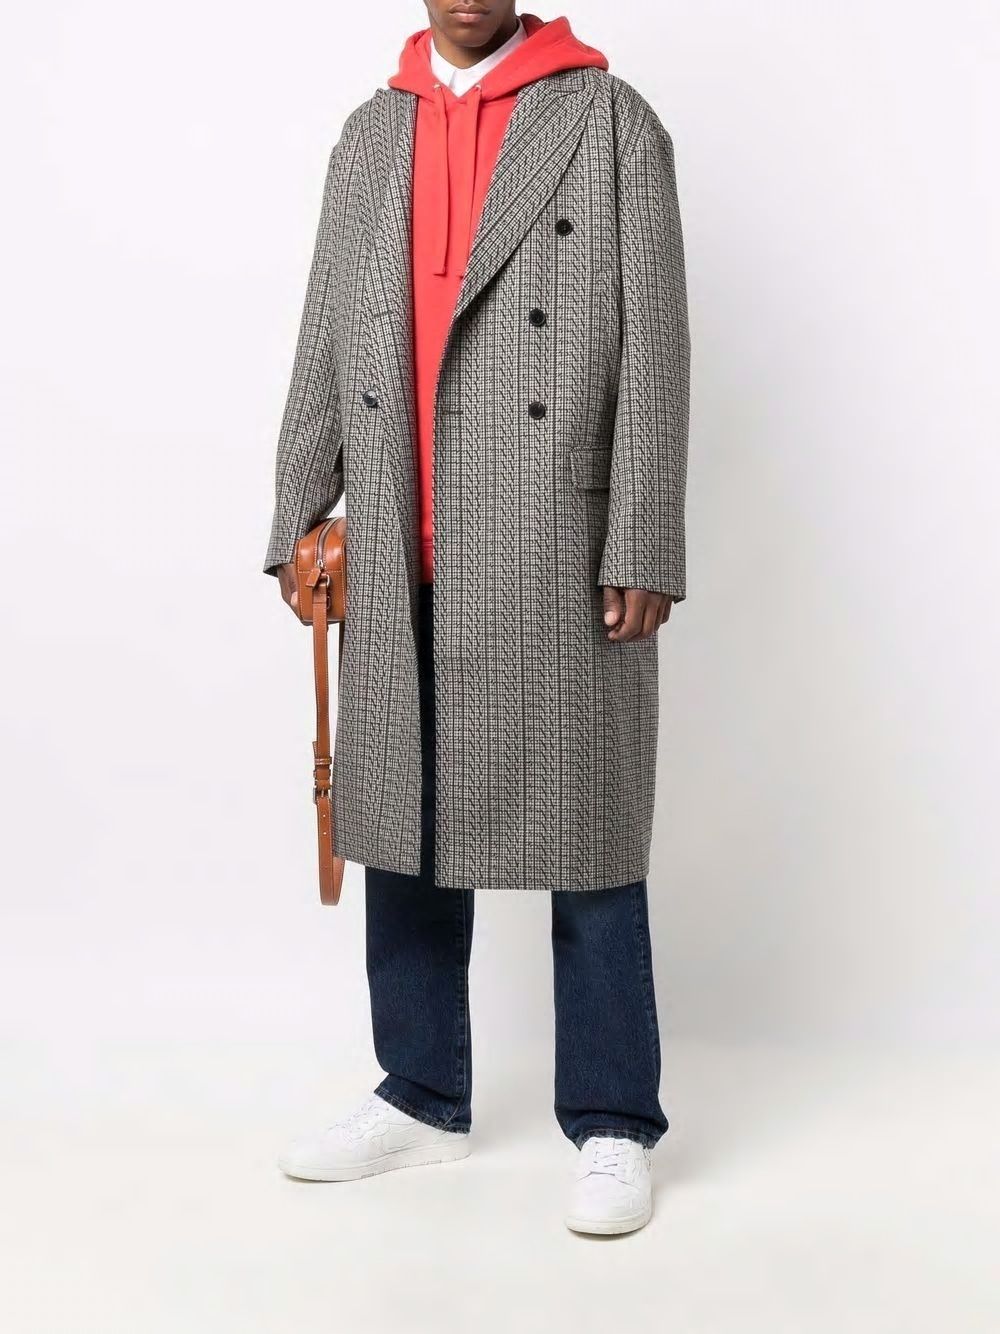 VALENTINO GRIGIO/NERO VLTN TIMES Jacket for Men - FW21 Collection